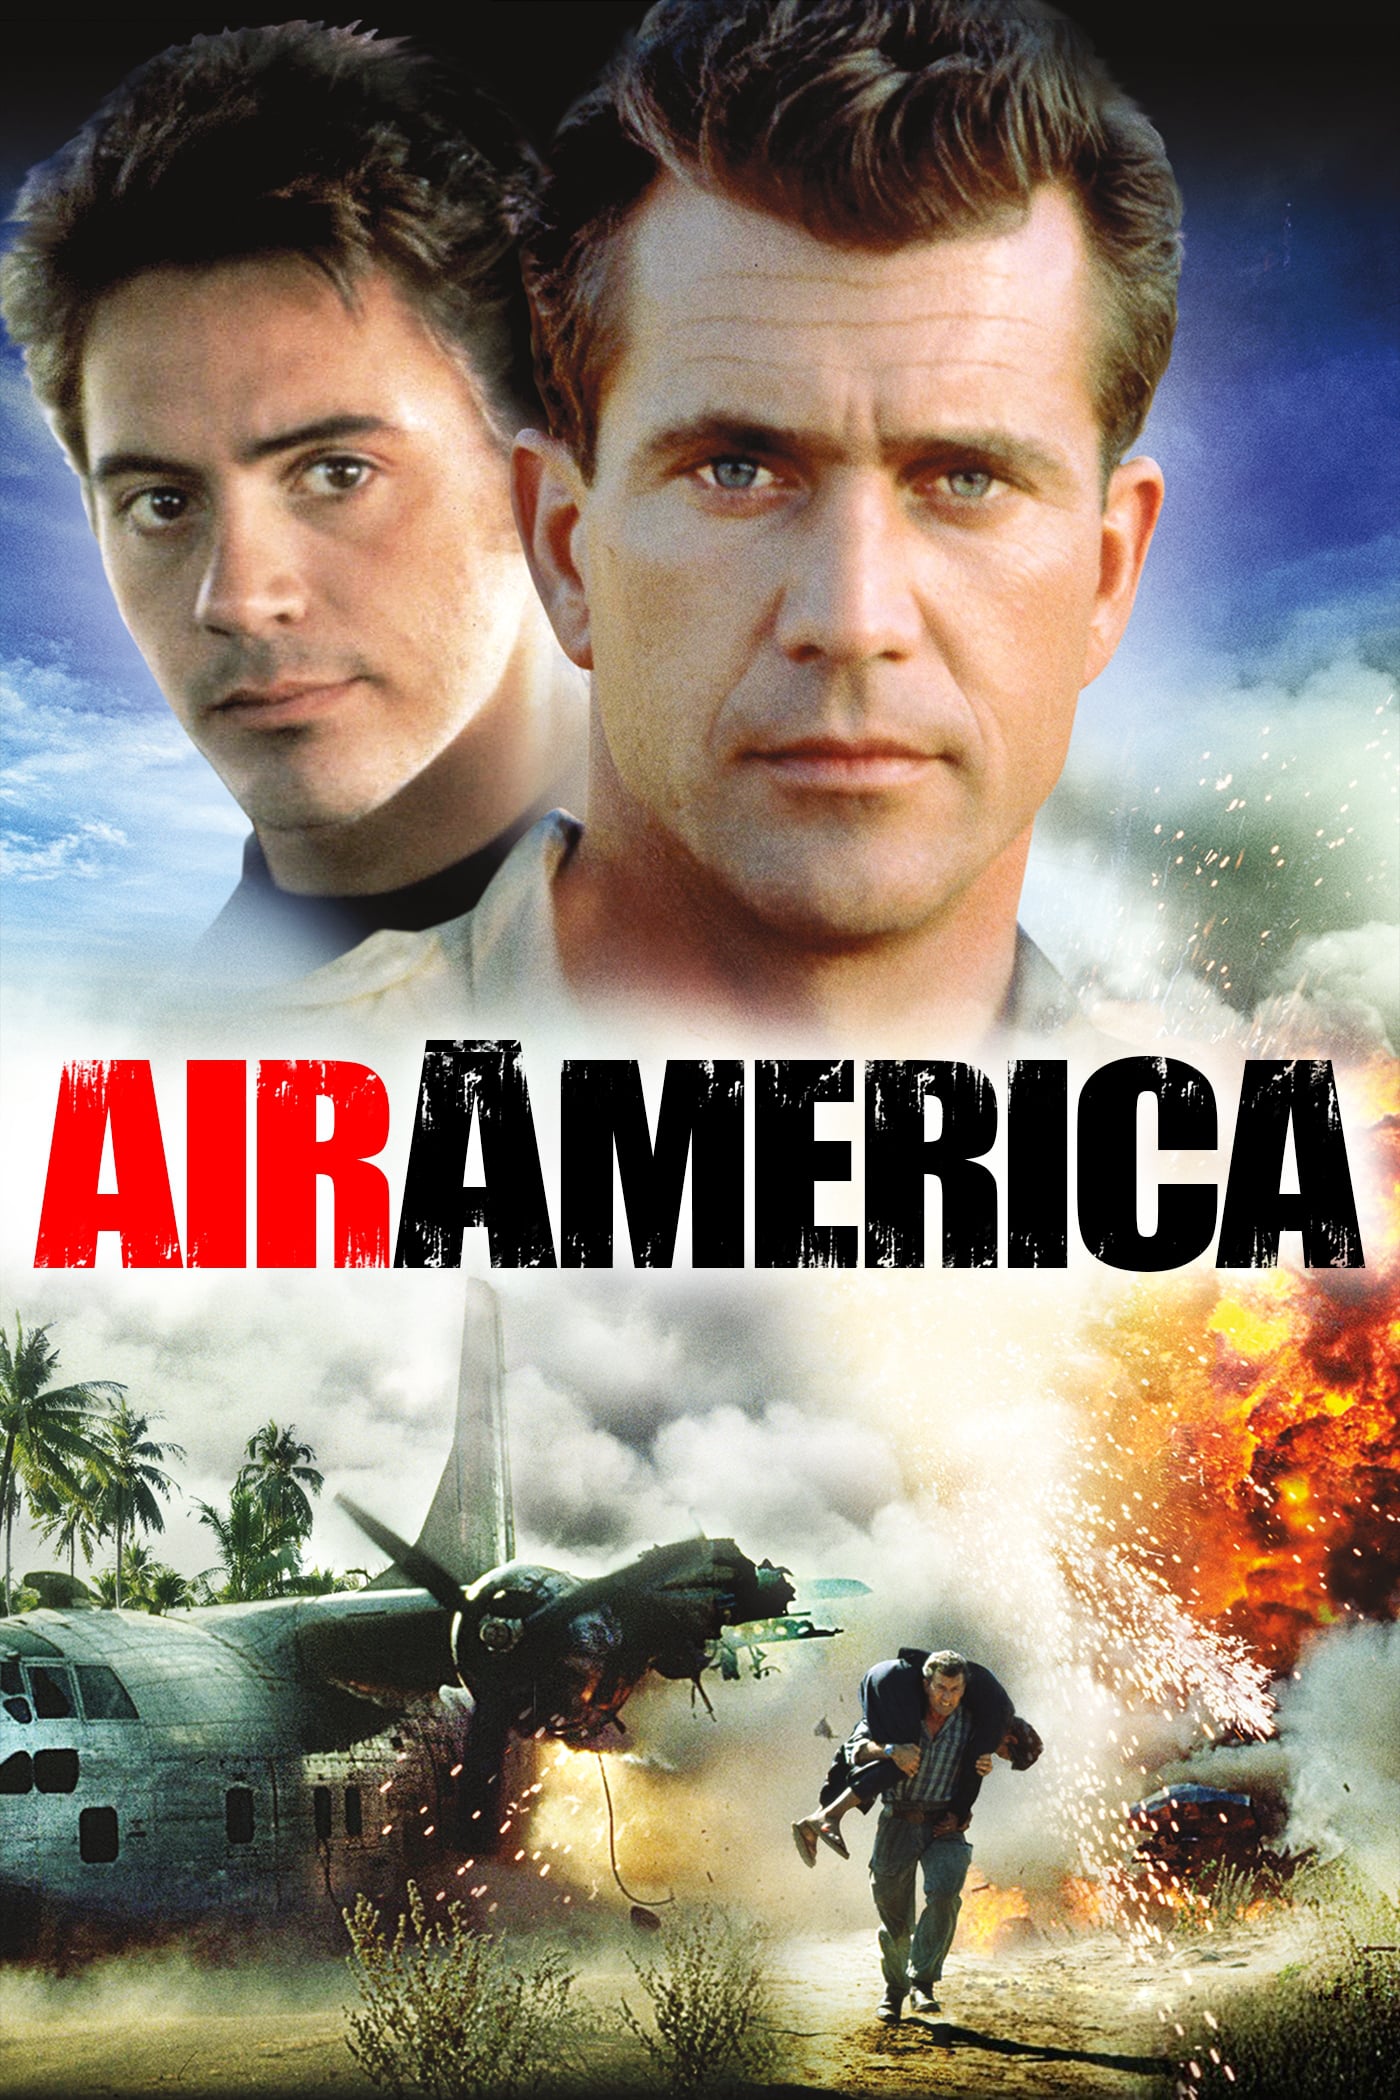 Plakat von "Air America"